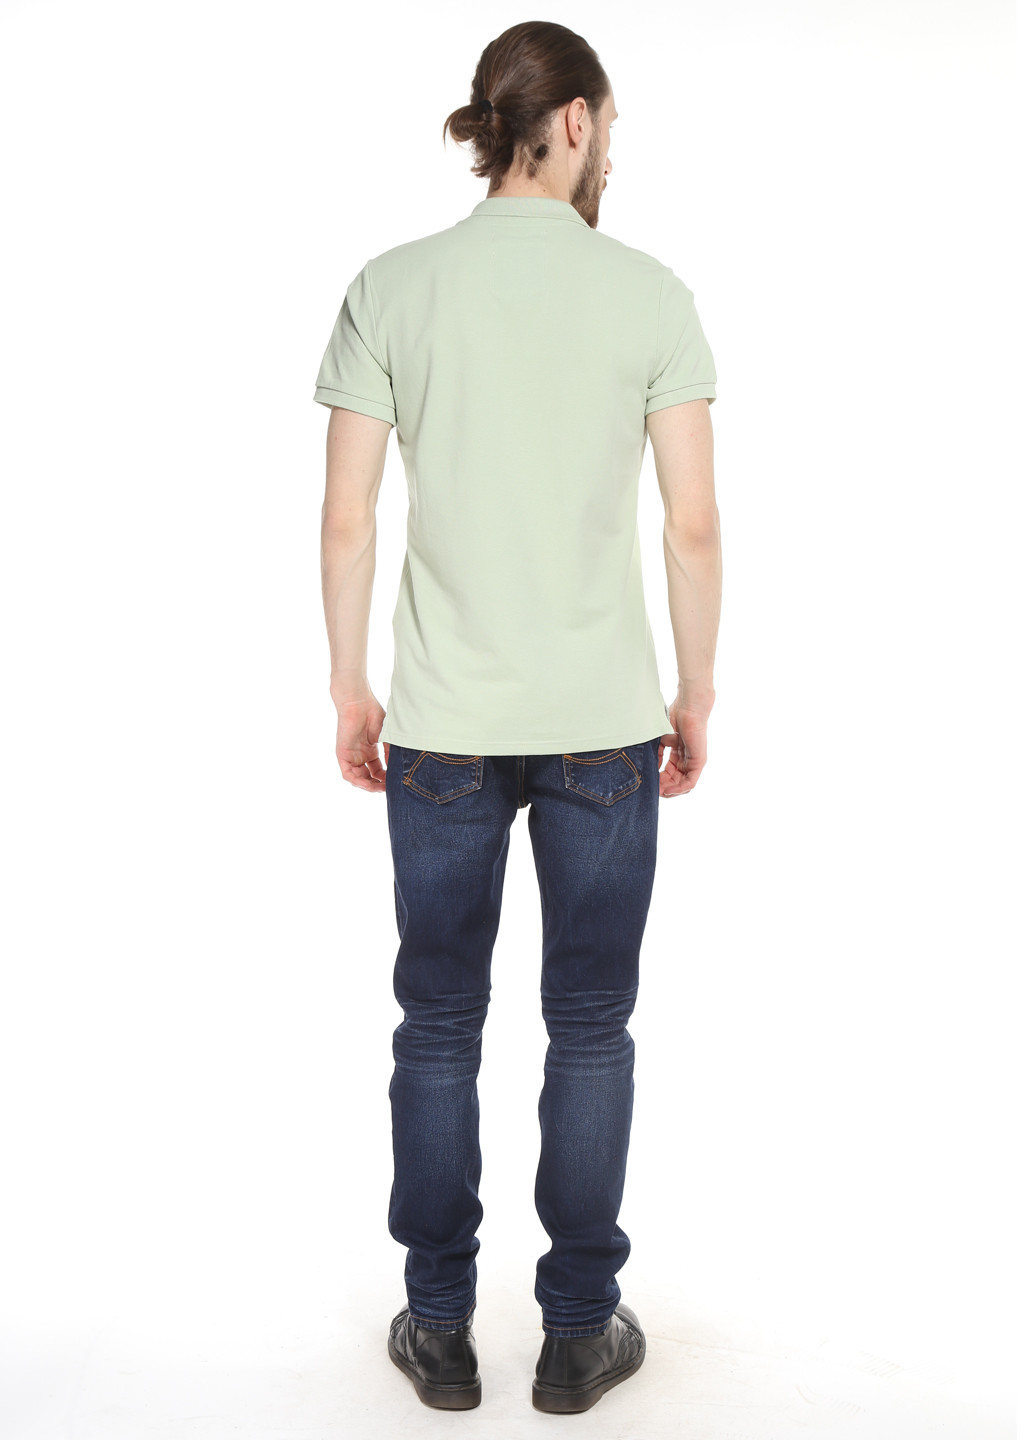 Салатовая футболка-поло для мужчин Time Out однотонная